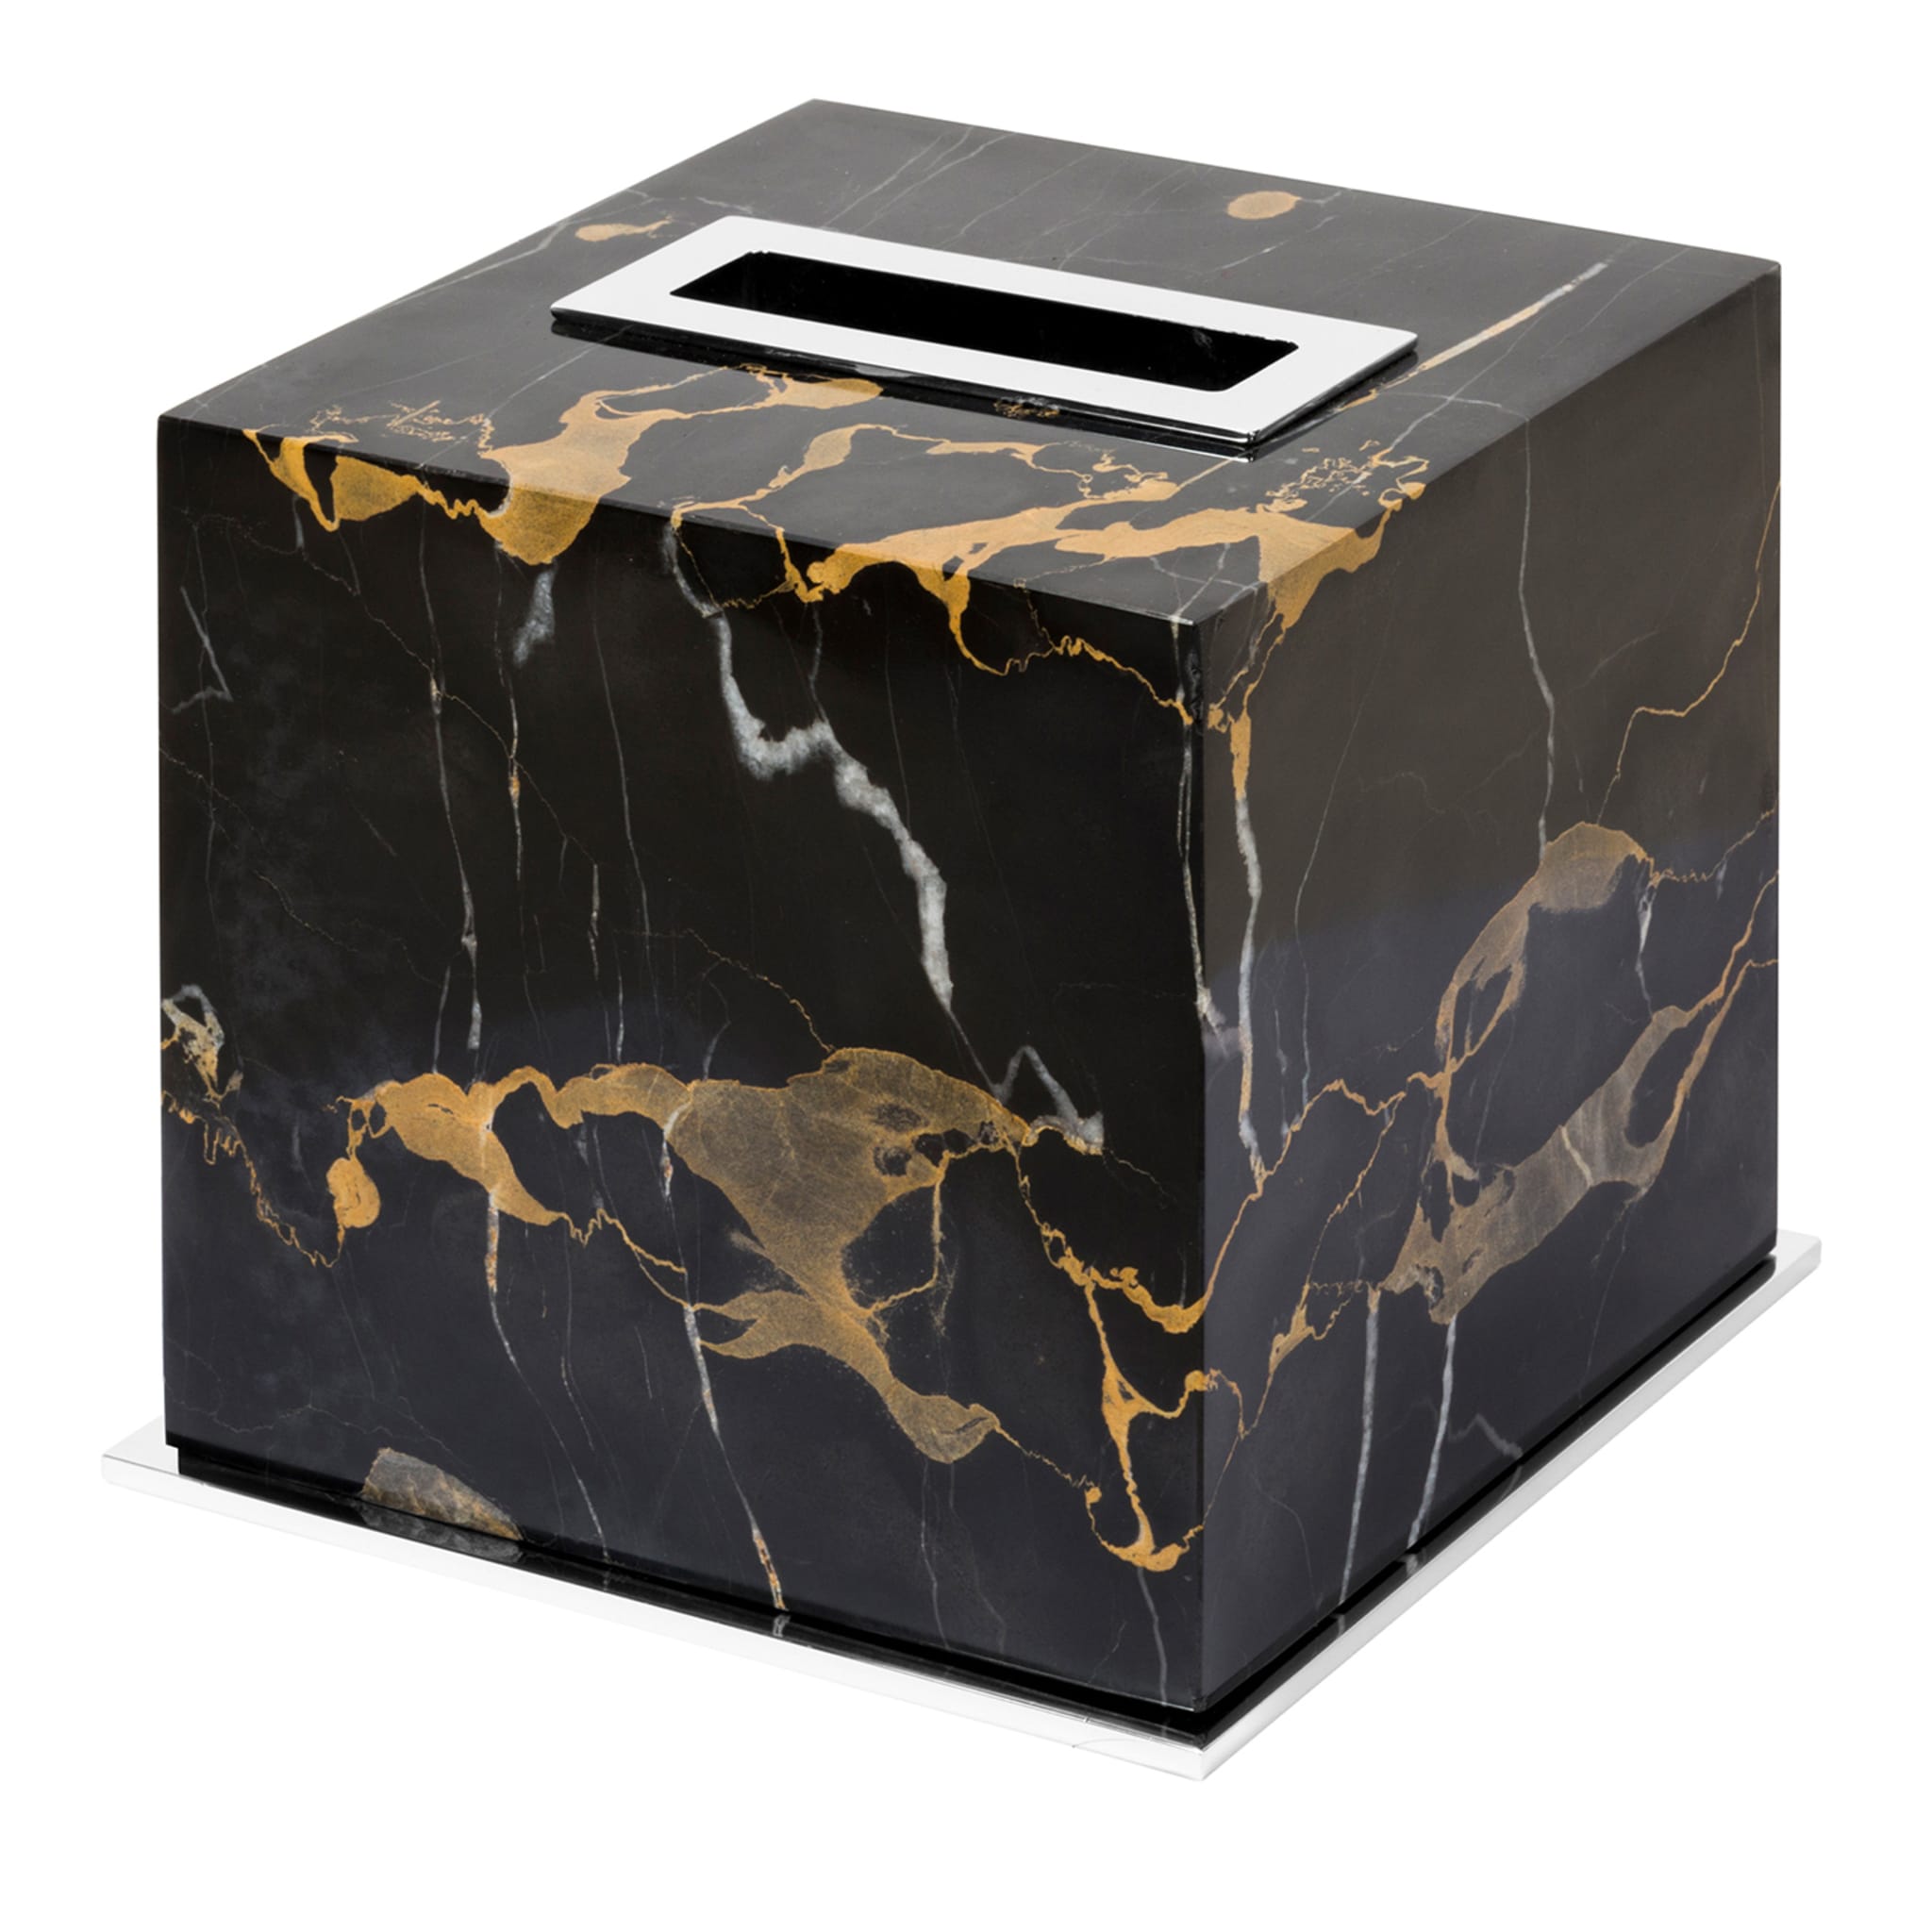 Positano black portoro marble tissue holder - Main view